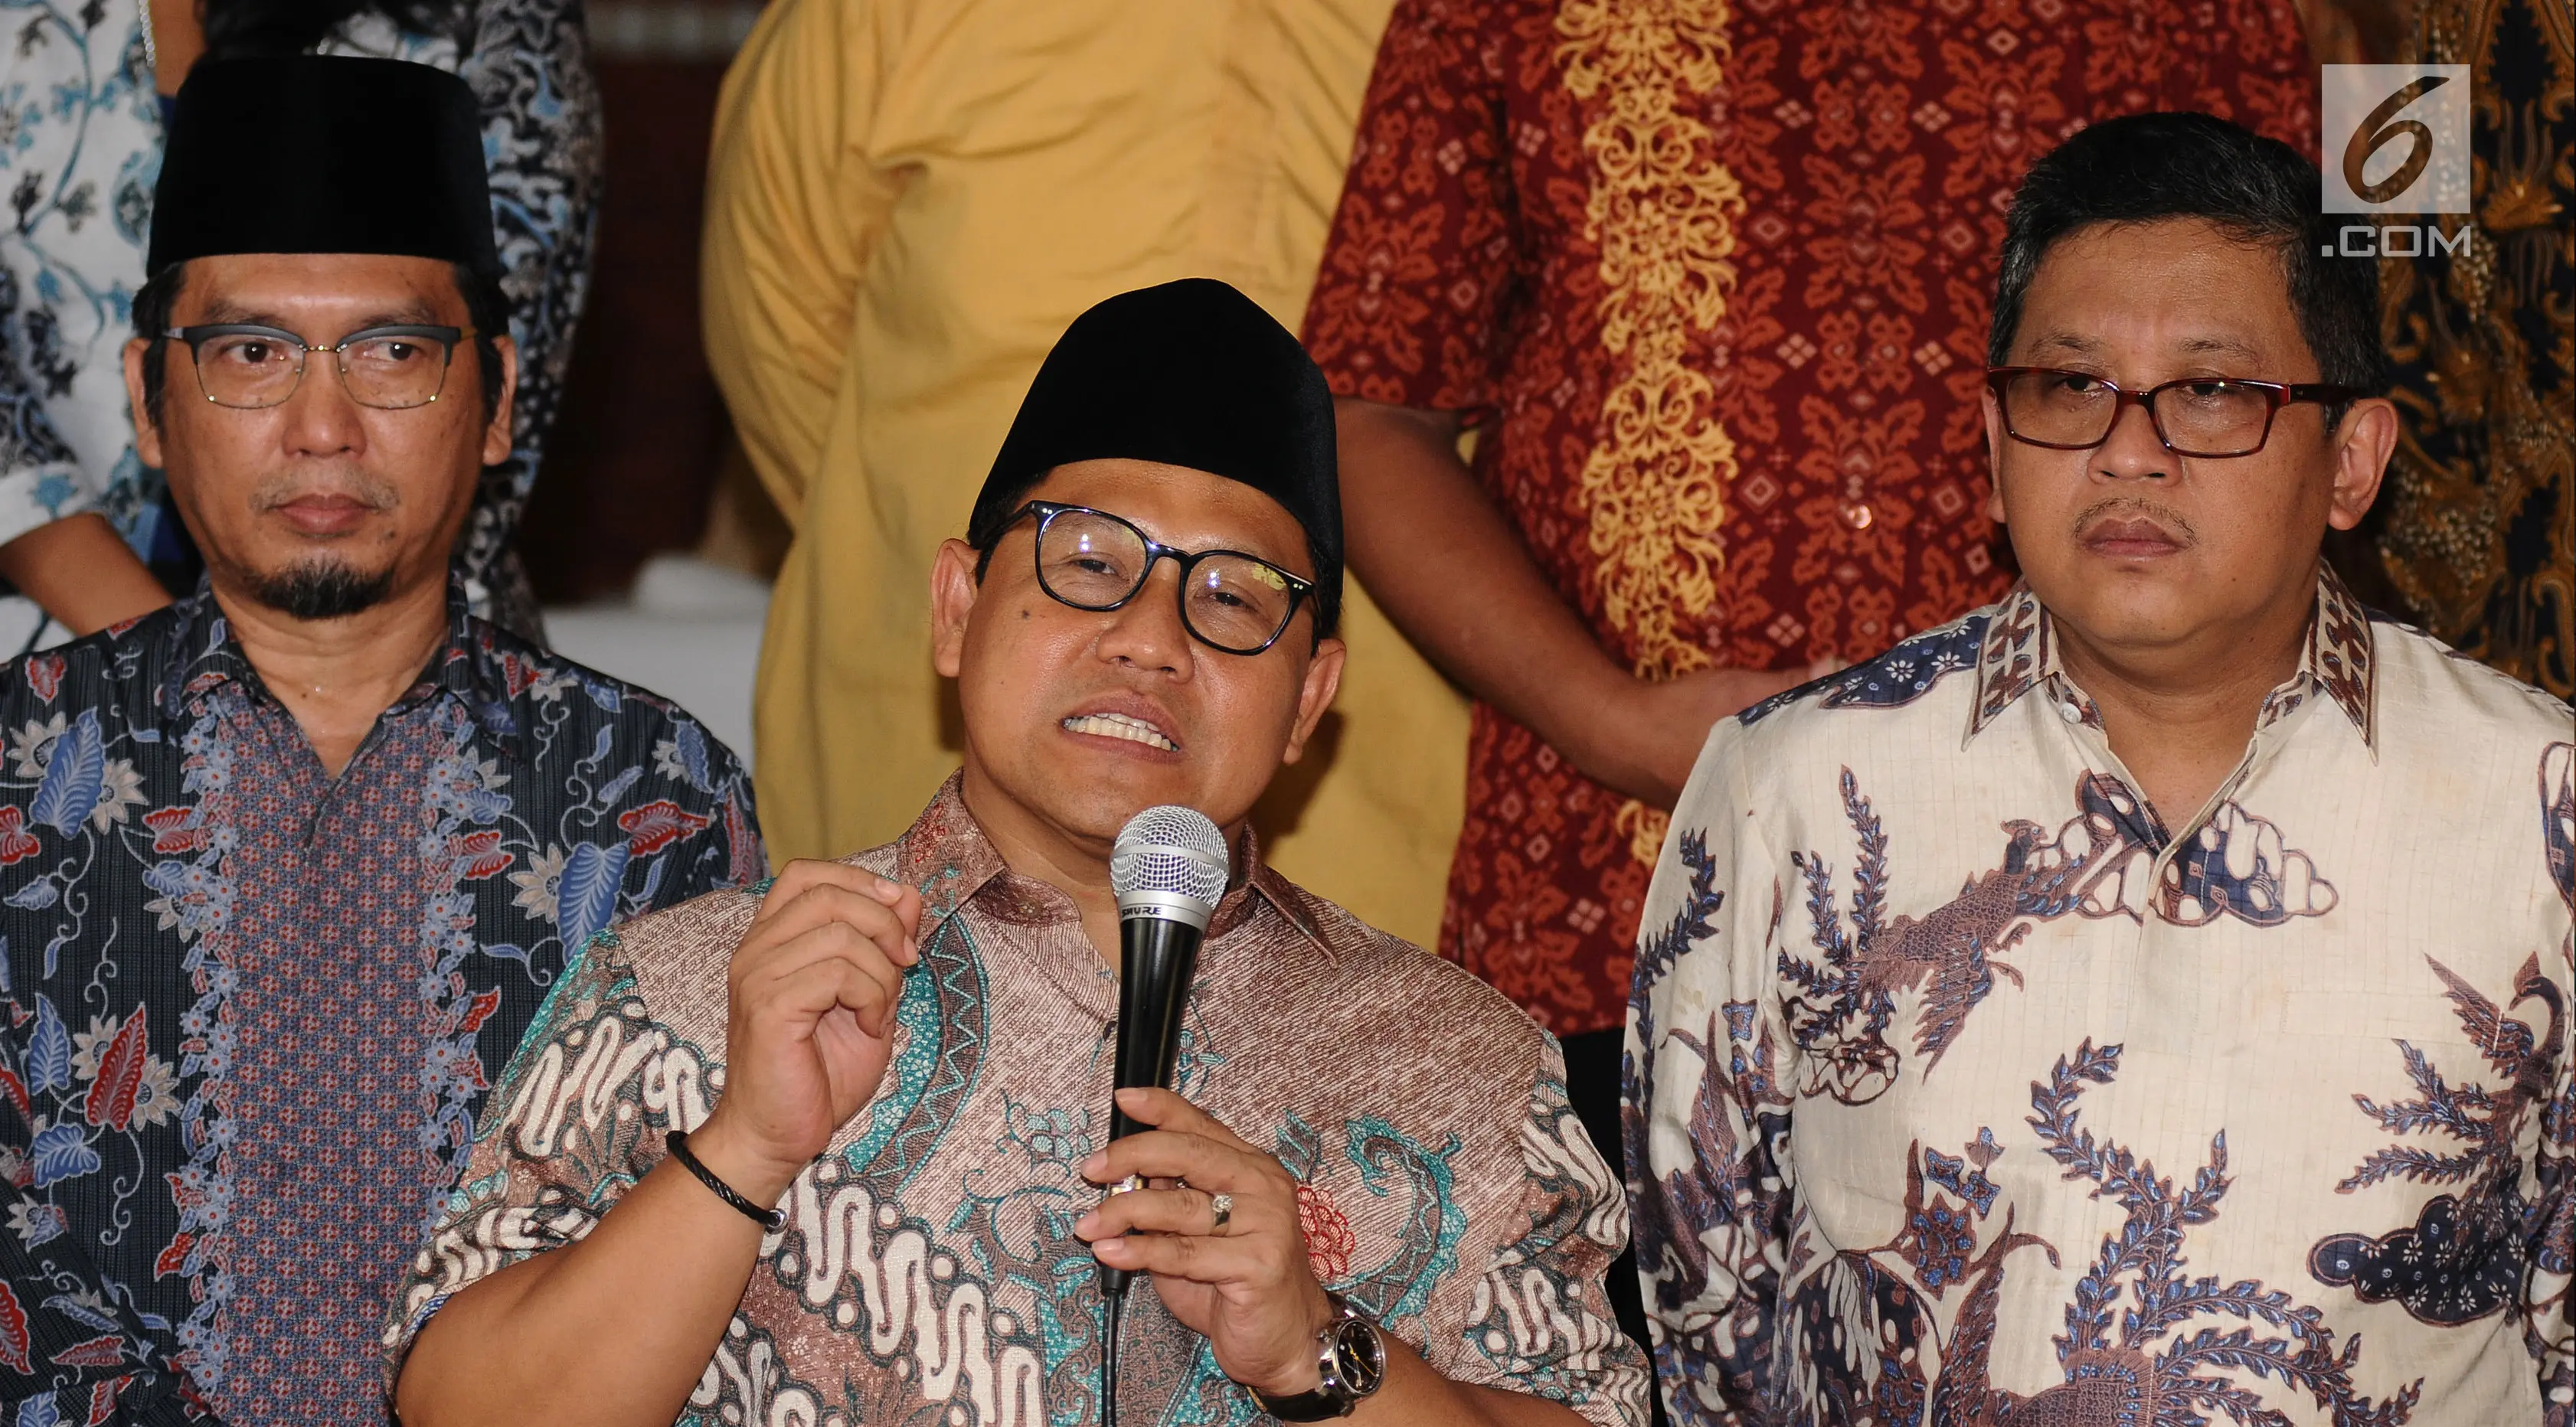 Ketua Umum PKB, Muhaimin Iskandar (tengah) memberi keterangan usai melakukan pertemuan dengan tokoh lintas agama dan partai di Jakarta, Selasa (23/5). Pertemuan membahas masalah kebangsaan menuju Indonesia yang damai. (Liputan6.com/Helmi Fithriansyah)